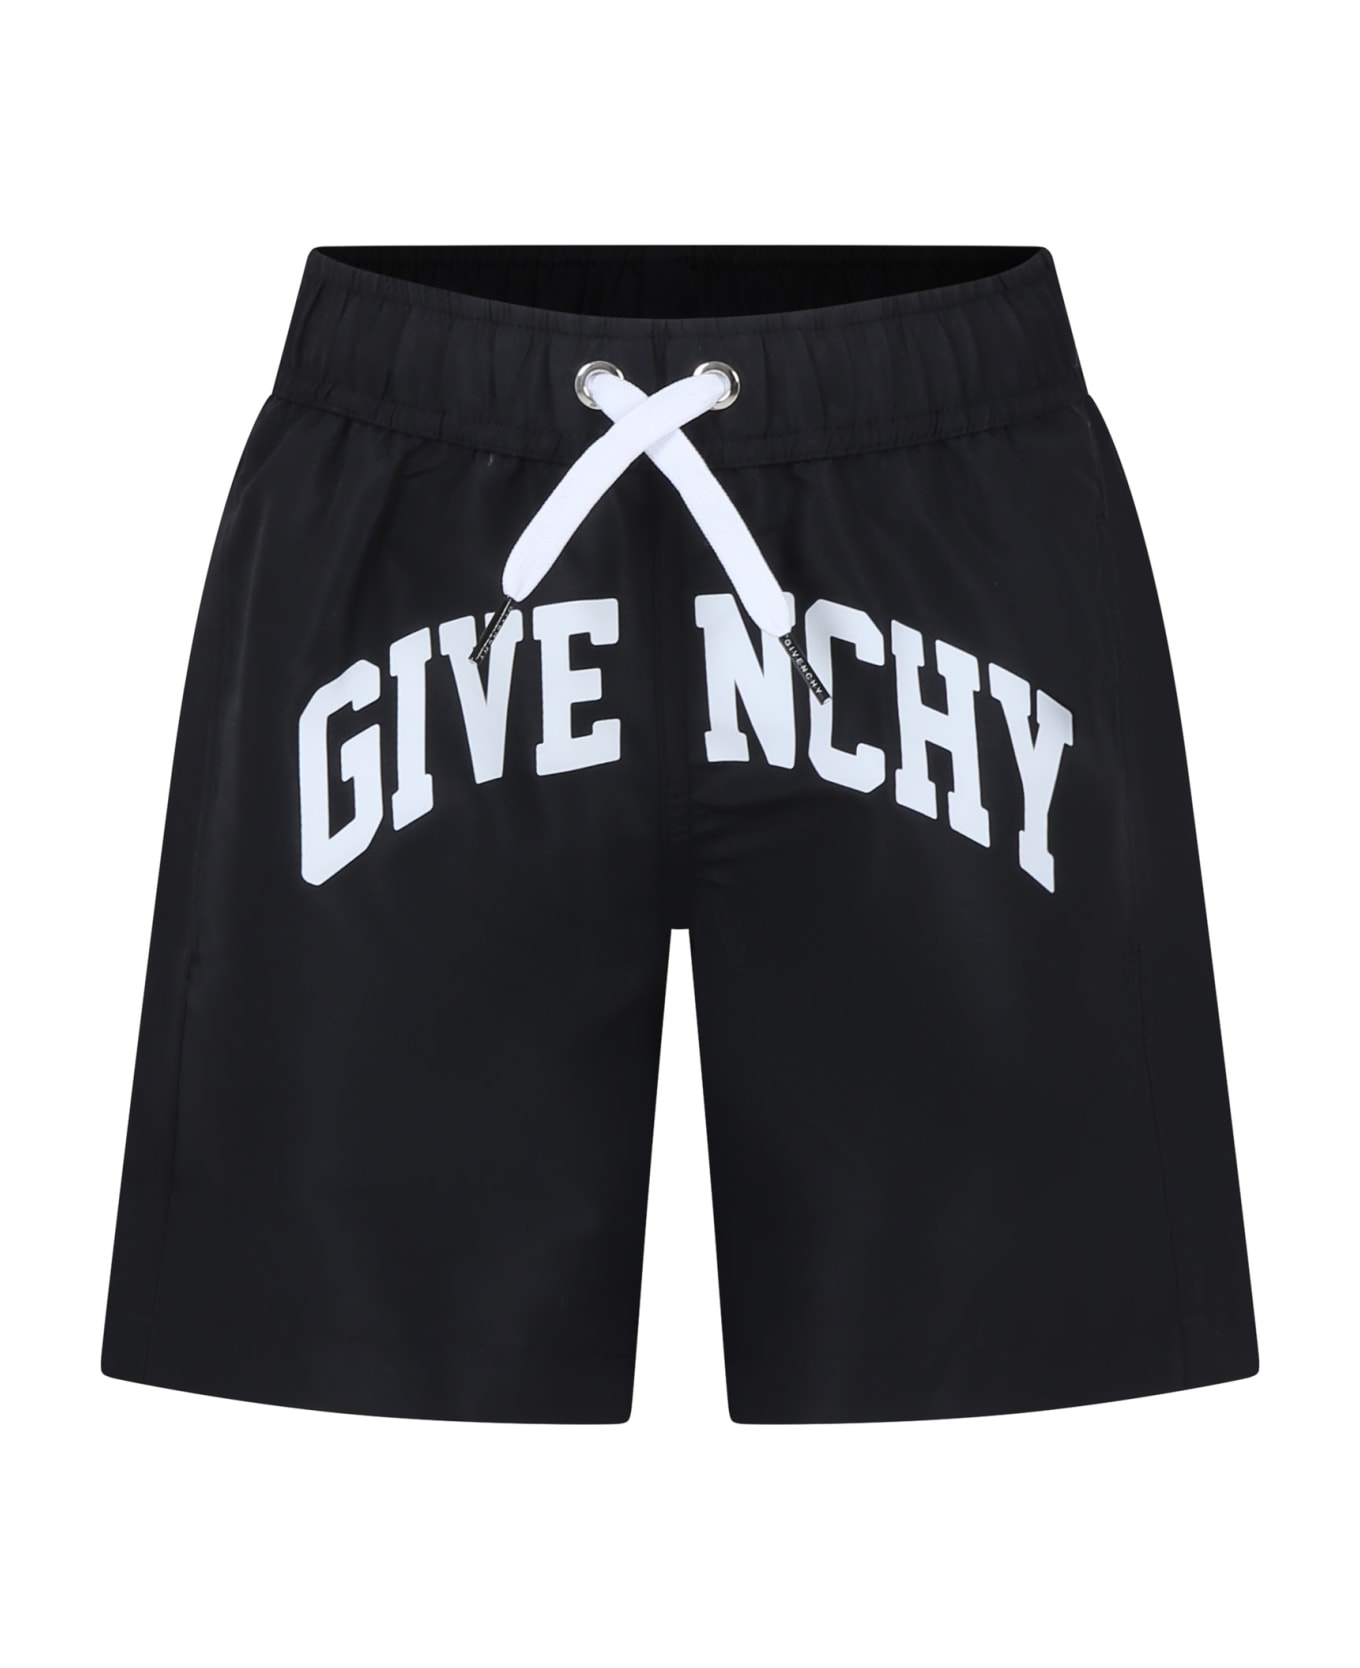 Givenchy Black Swim Shorts For Boy With Logo - Black